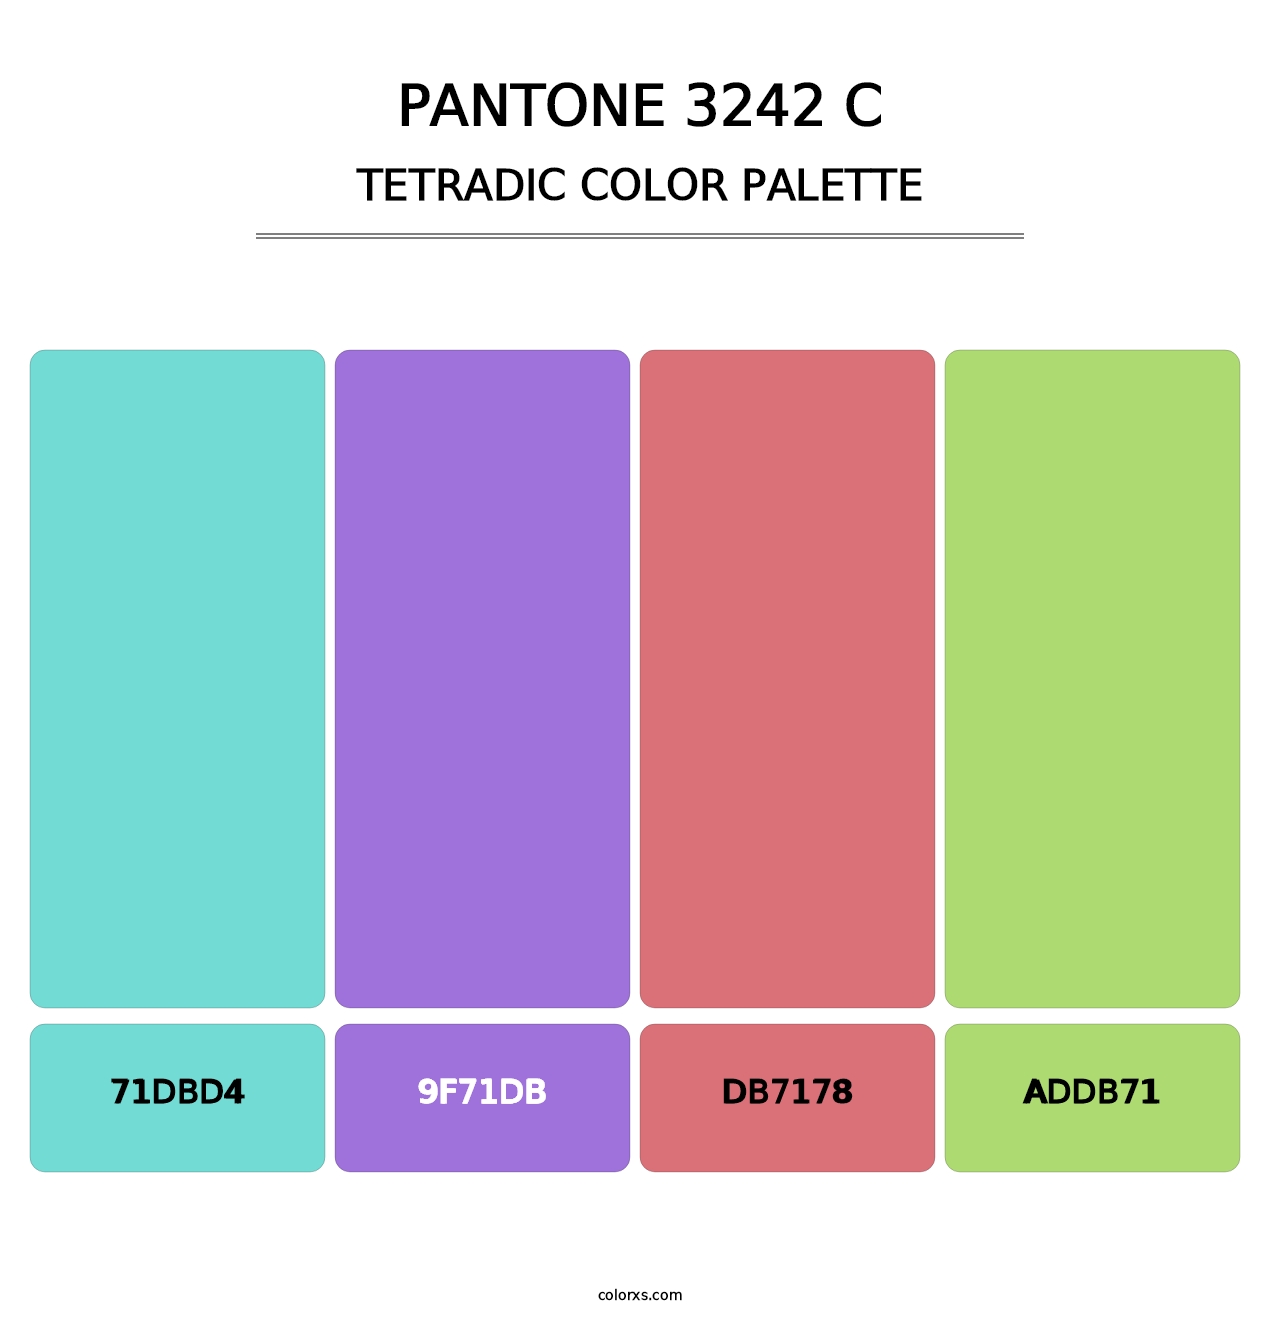 PANTONE 3242 C - Tetradic Color Palette